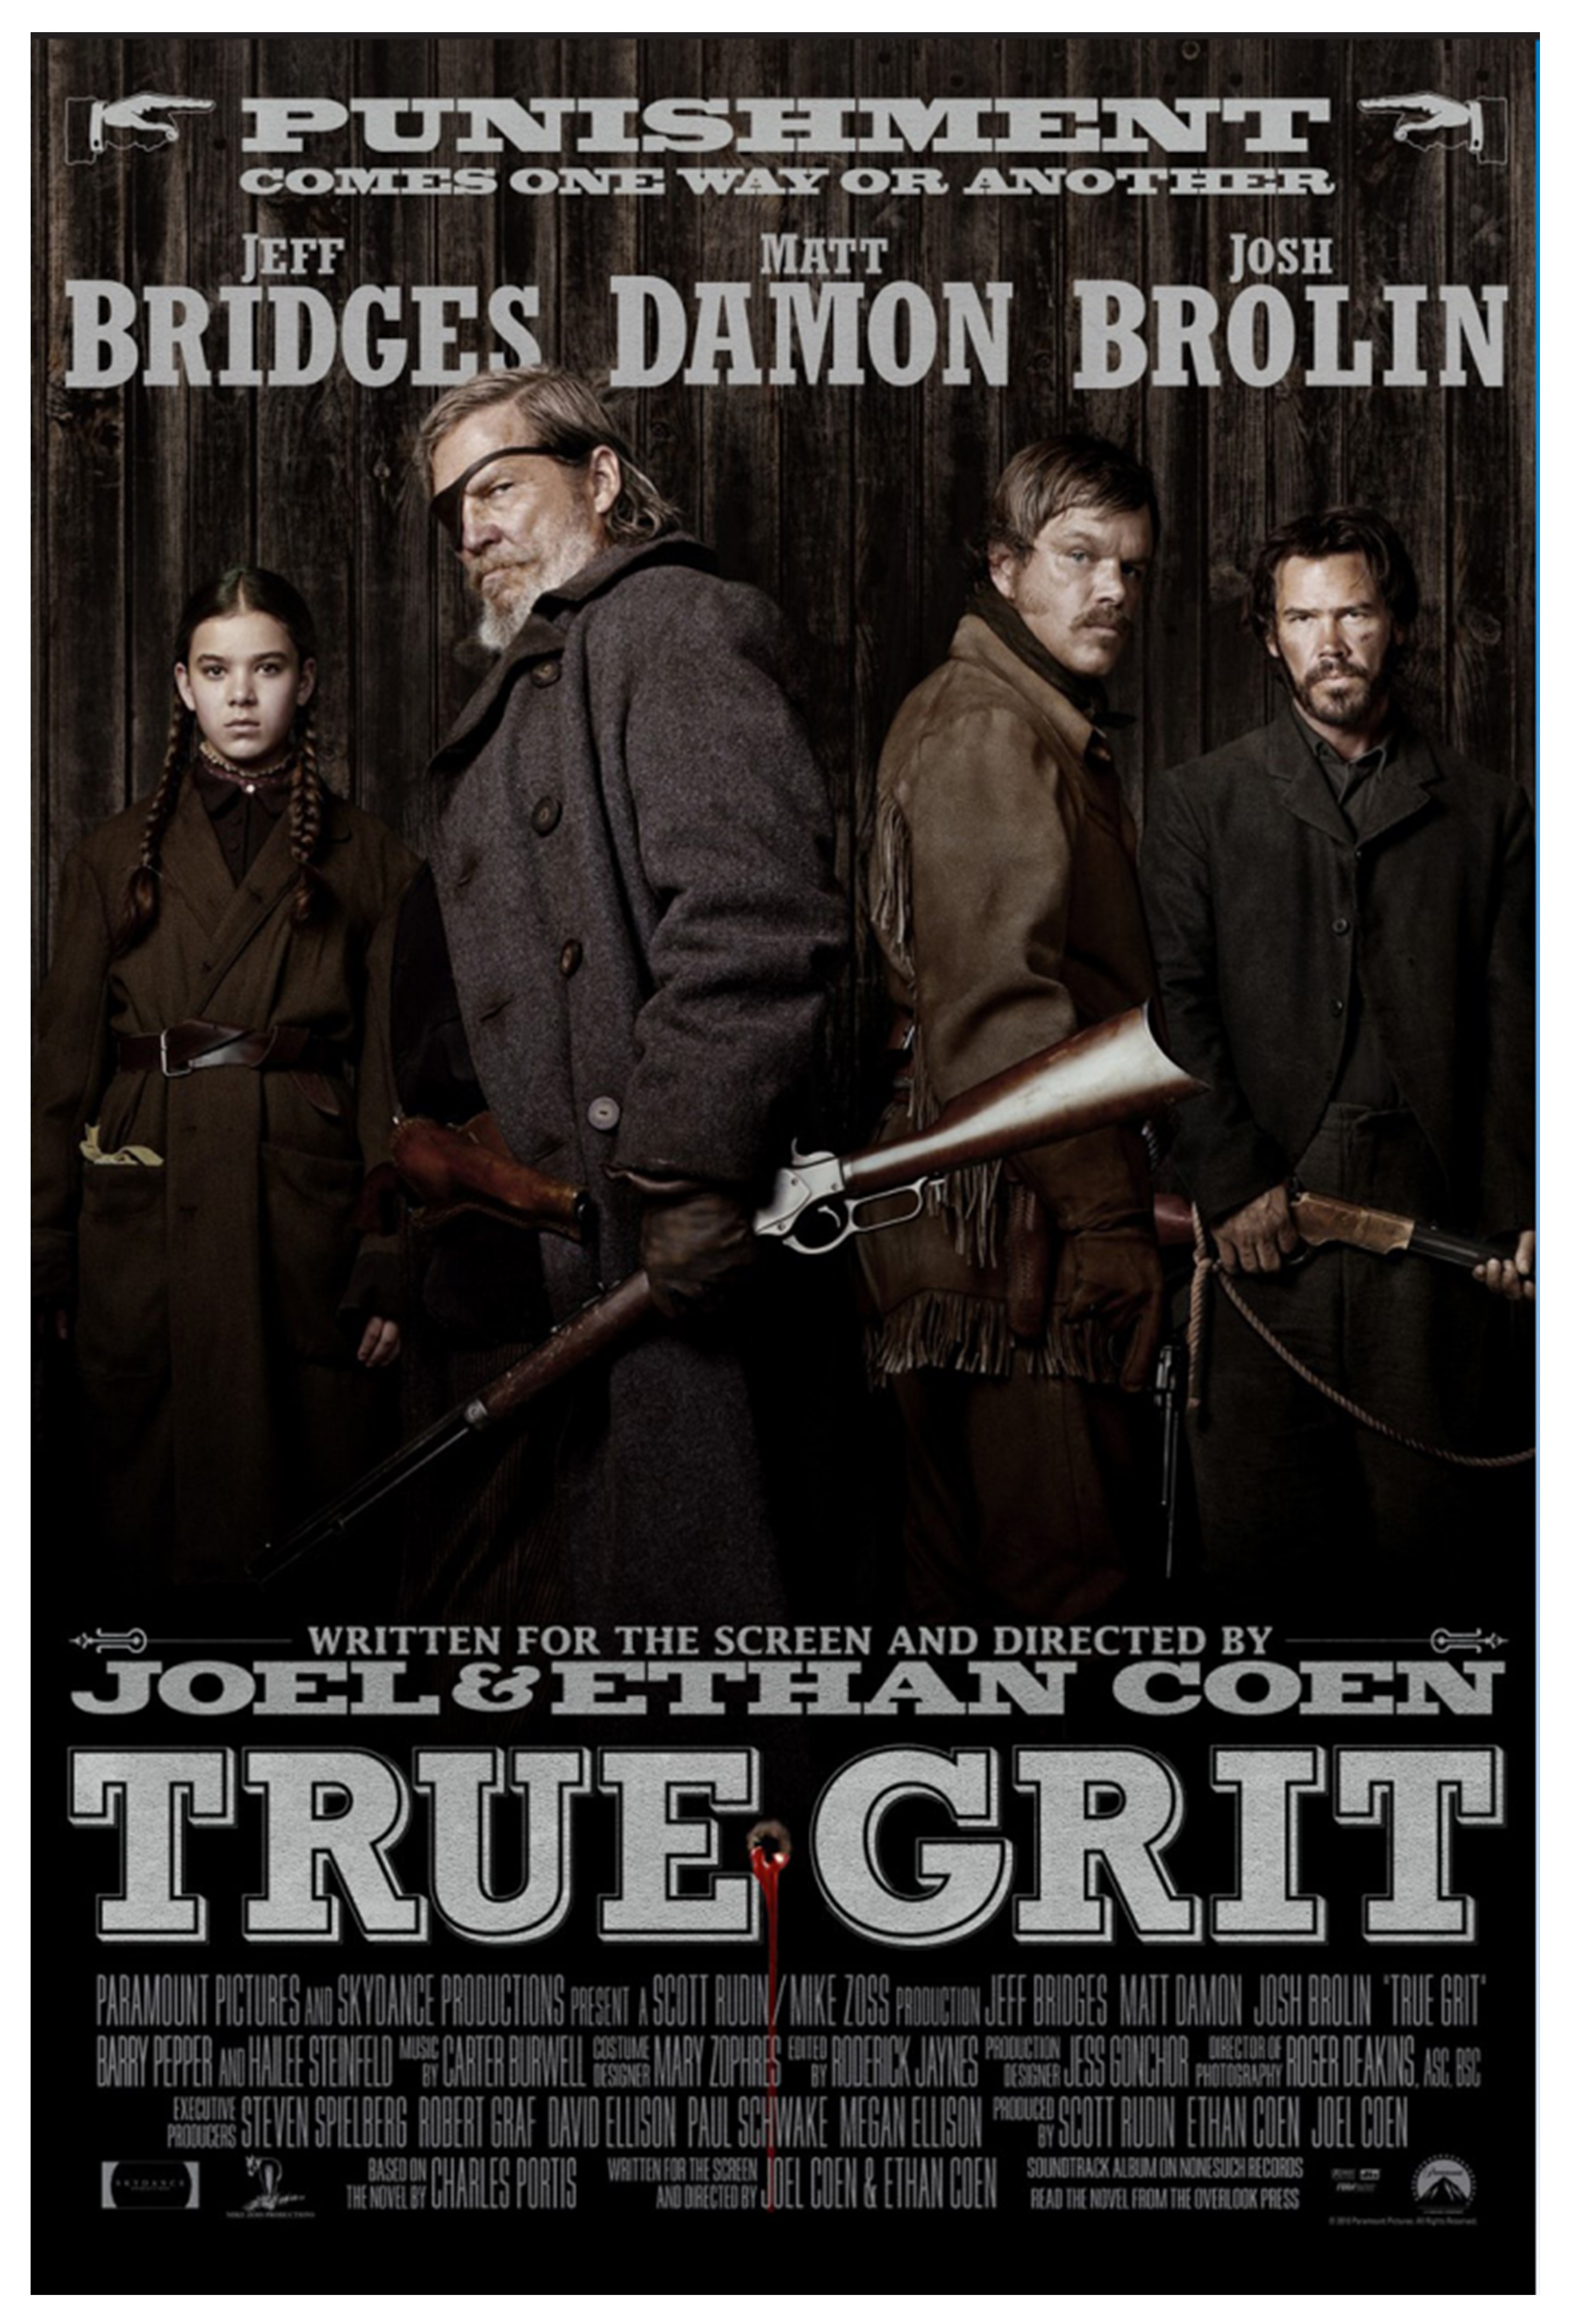 Film poster for True Grit